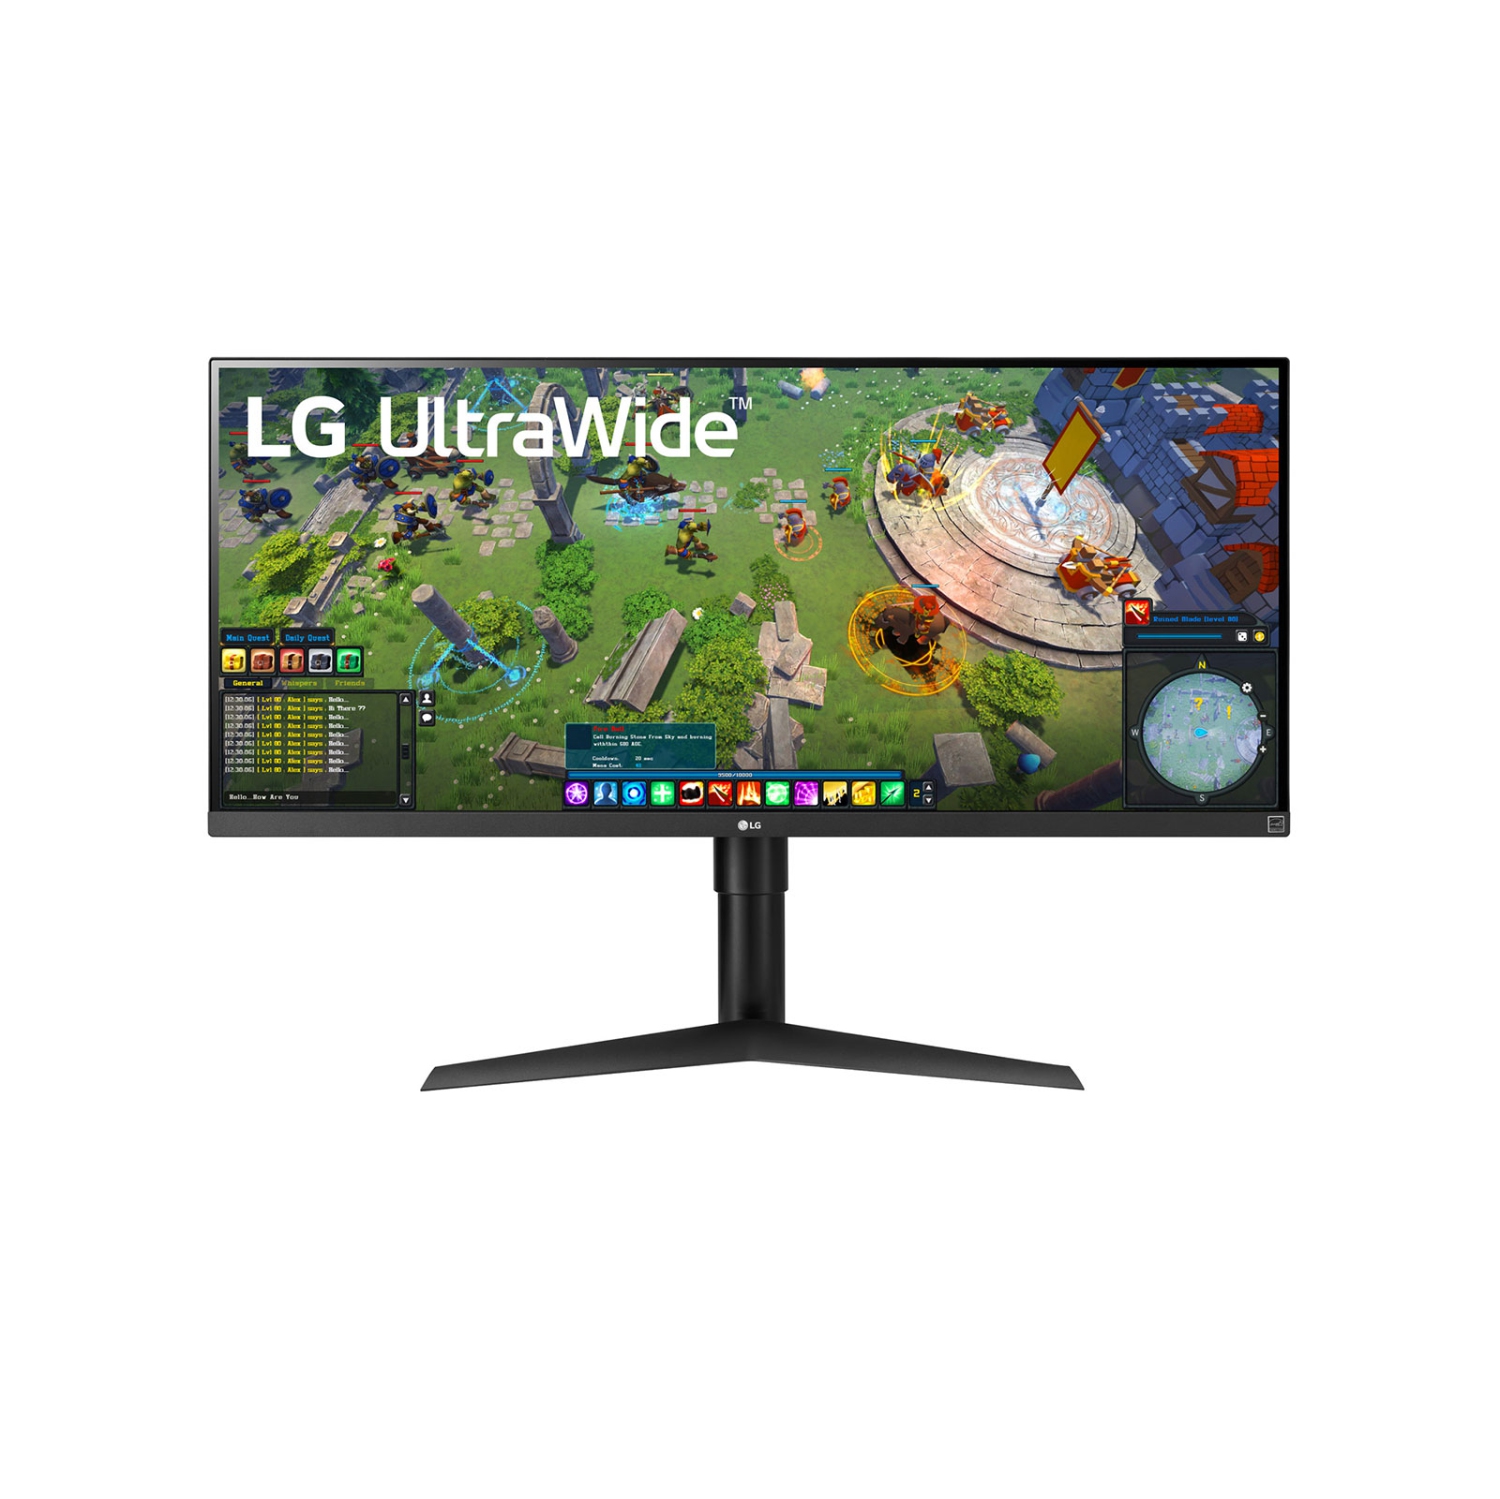 LG Ultrawide 34WP65G-B 34" UW-UXGA LED LCD Monitor - 21:9